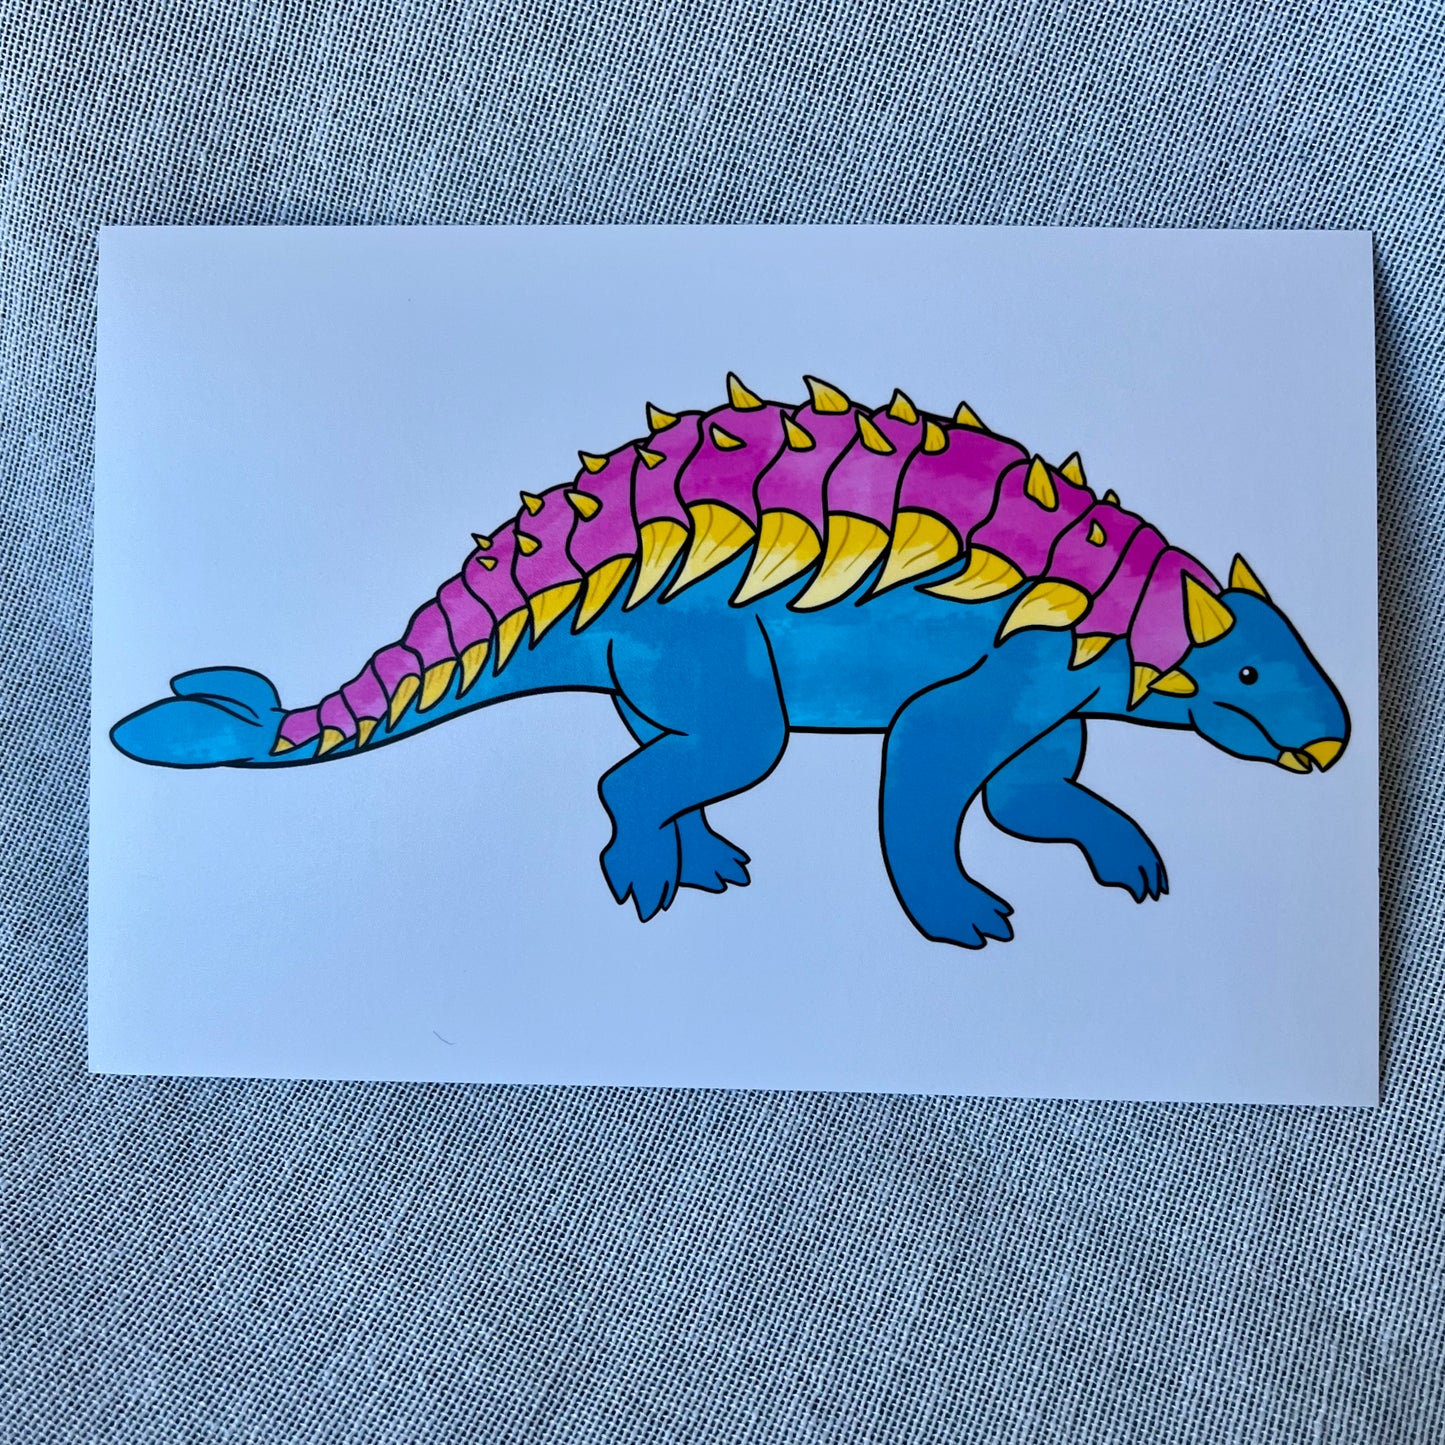 Pride Dinosaur Print: Pan-kylosaurus